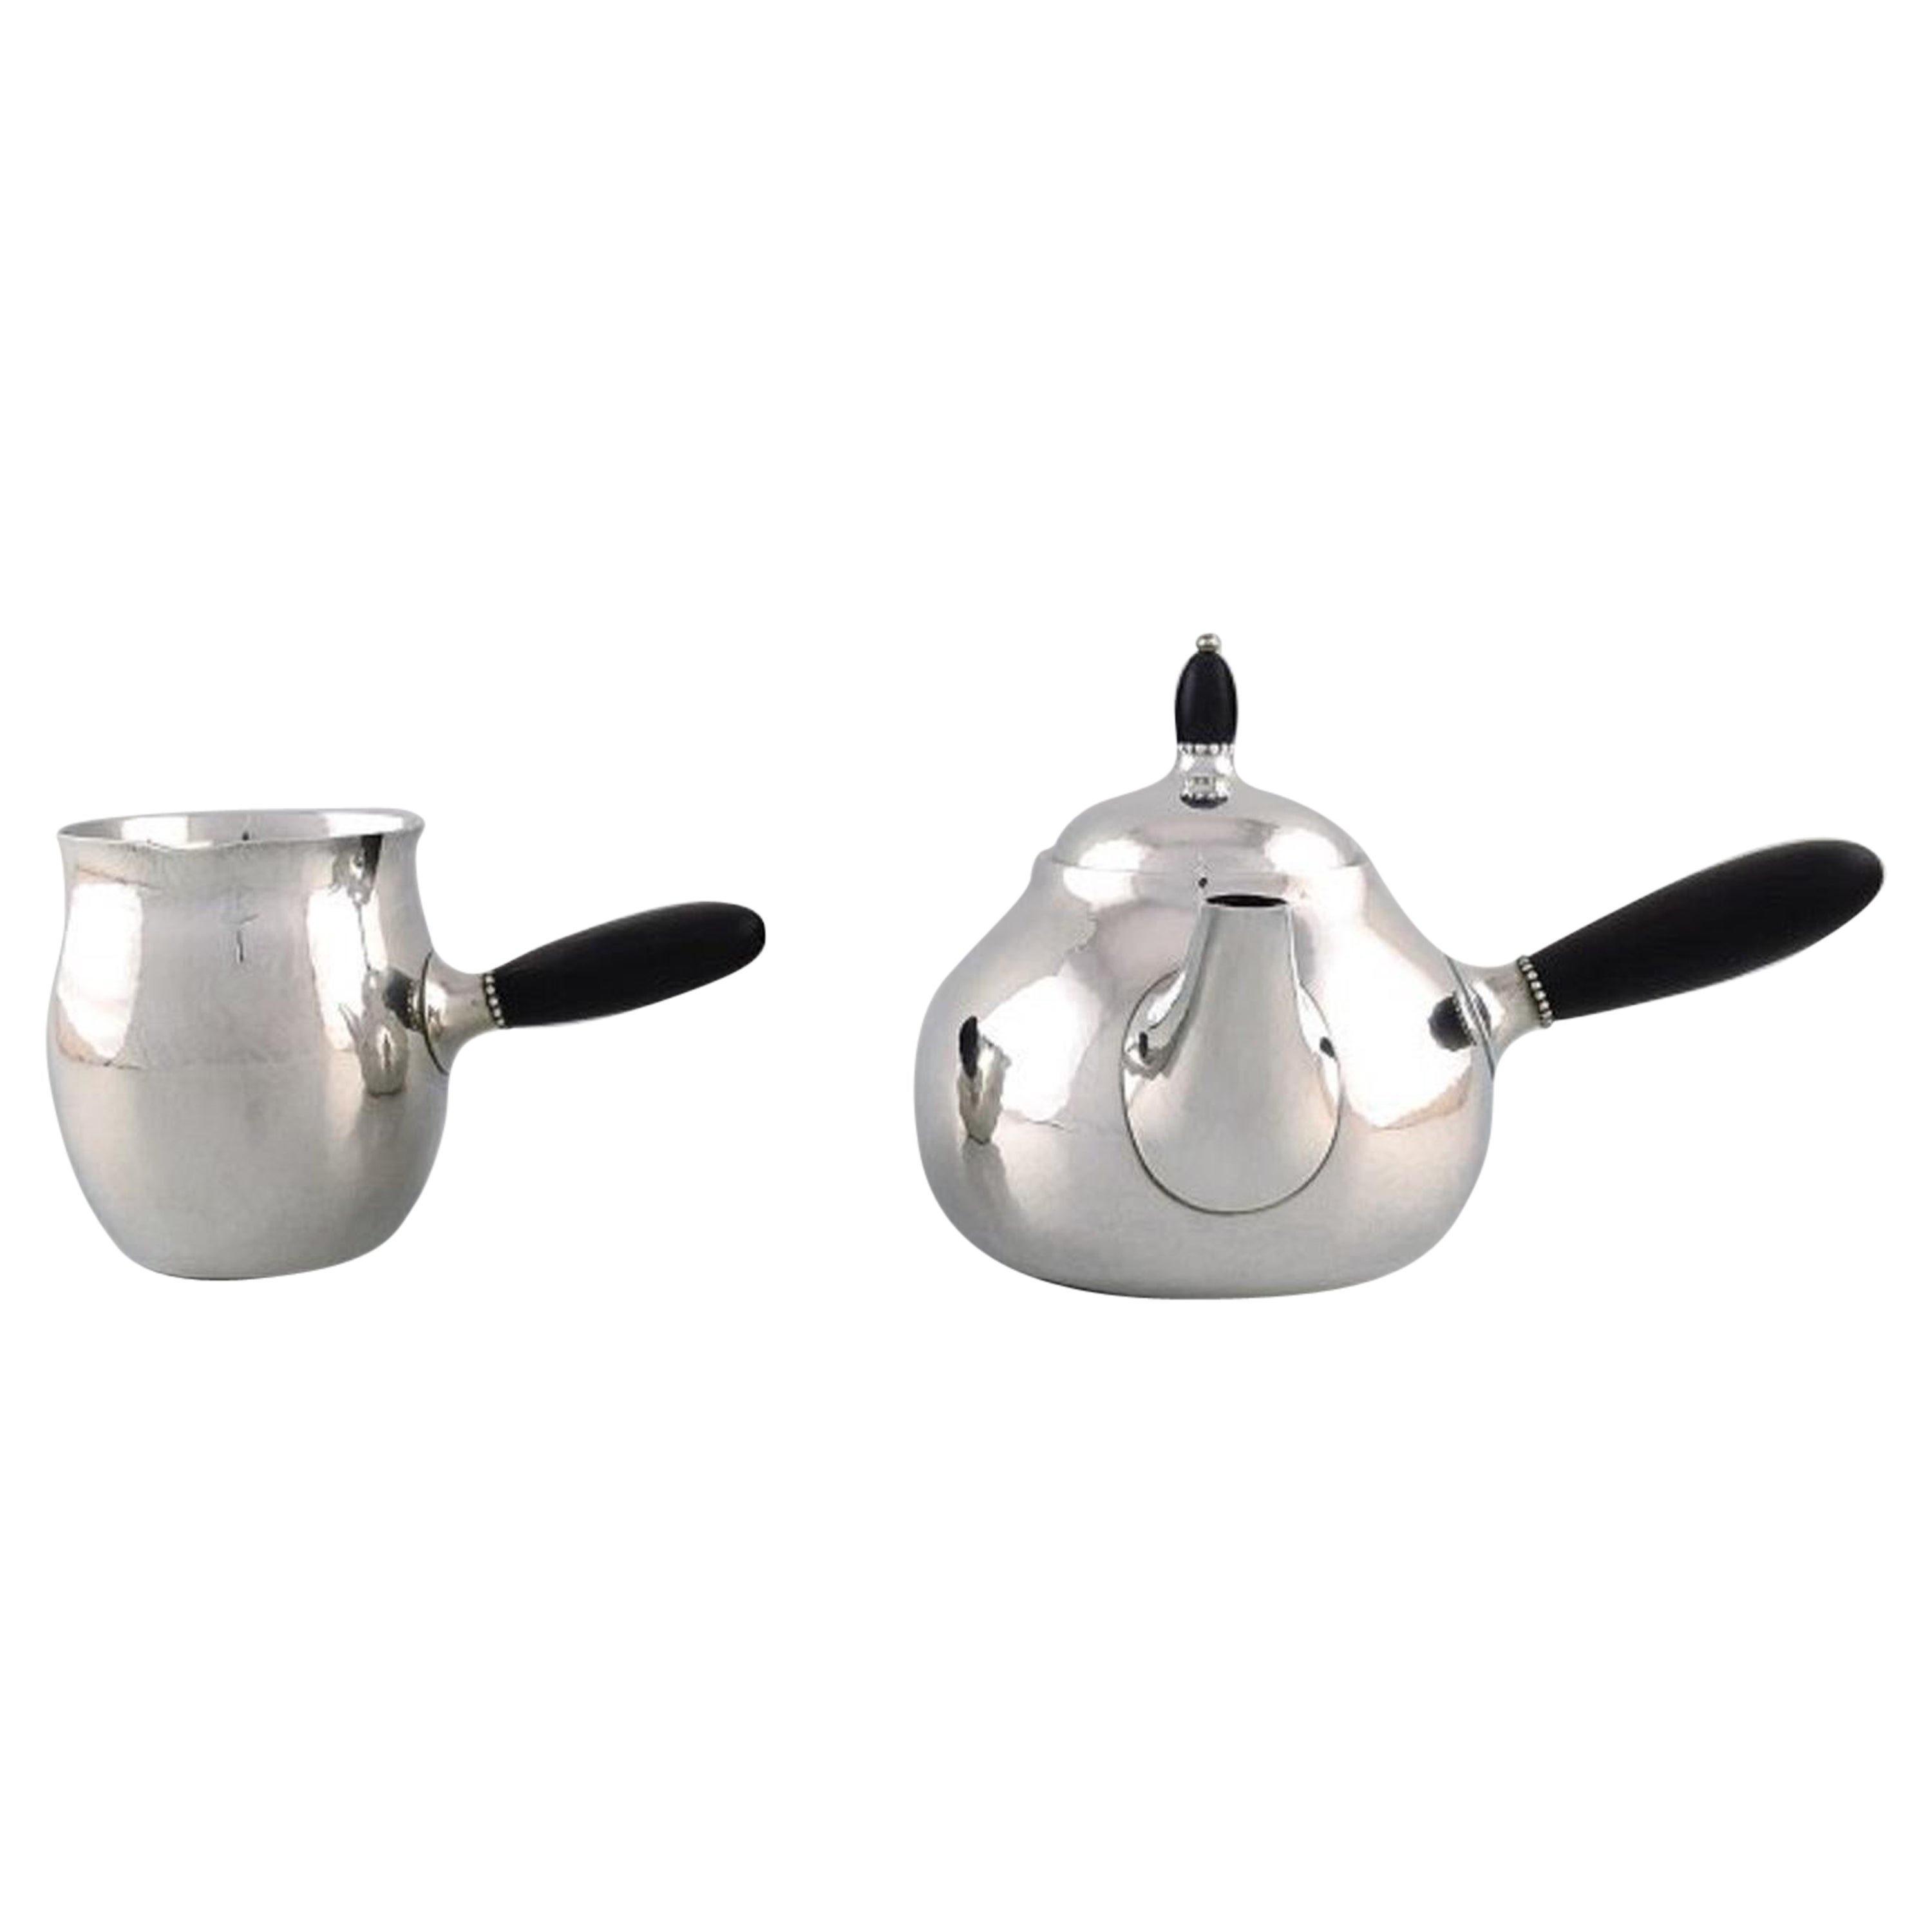 Georg Jensen Art Nouveau Teapot and Milk Jug in Sterling Silver